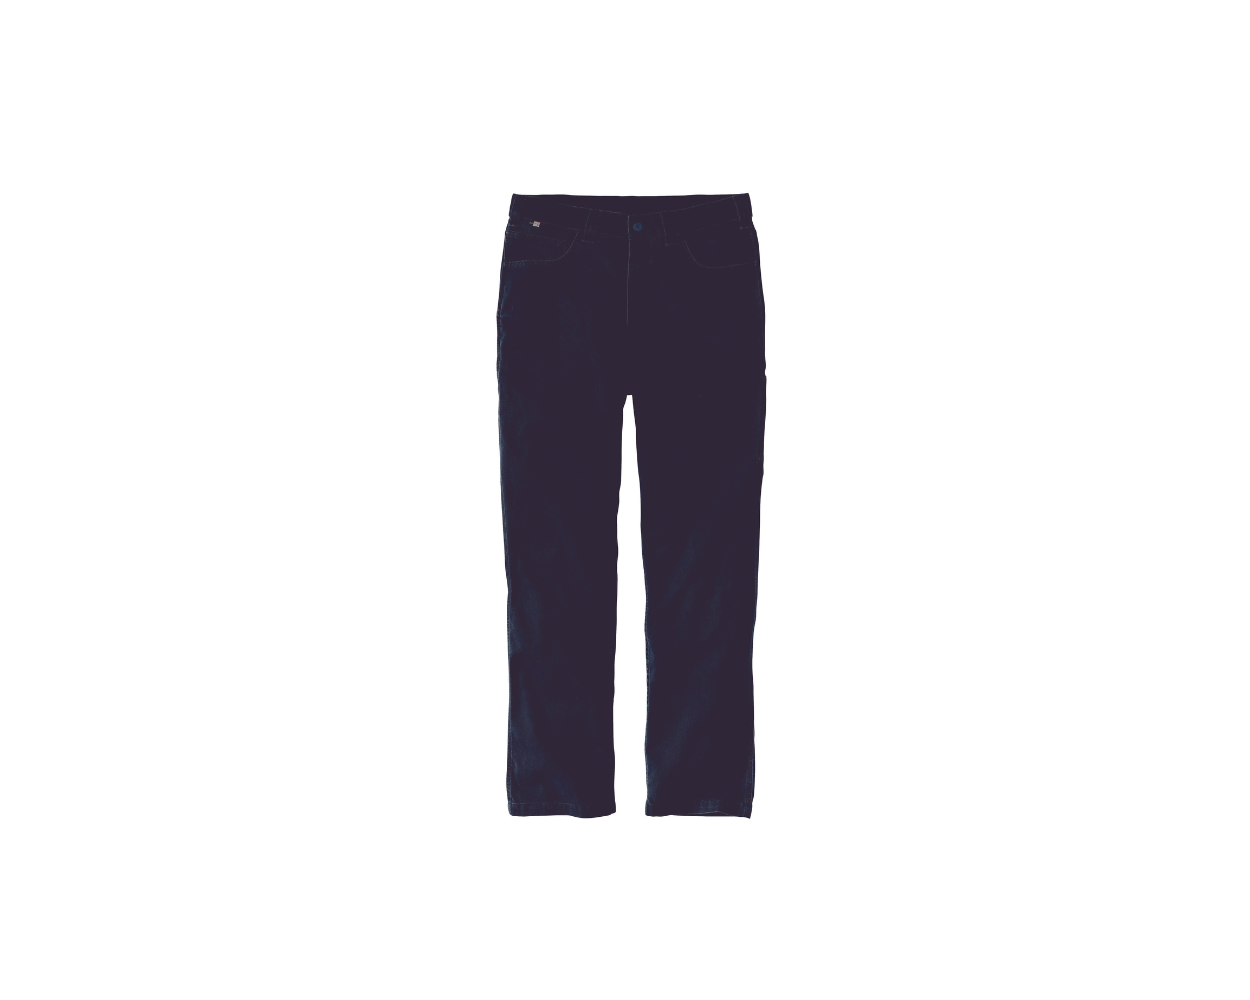 Carhartt FR Rugged Flex Pant - 104204 – JobSite Workwear